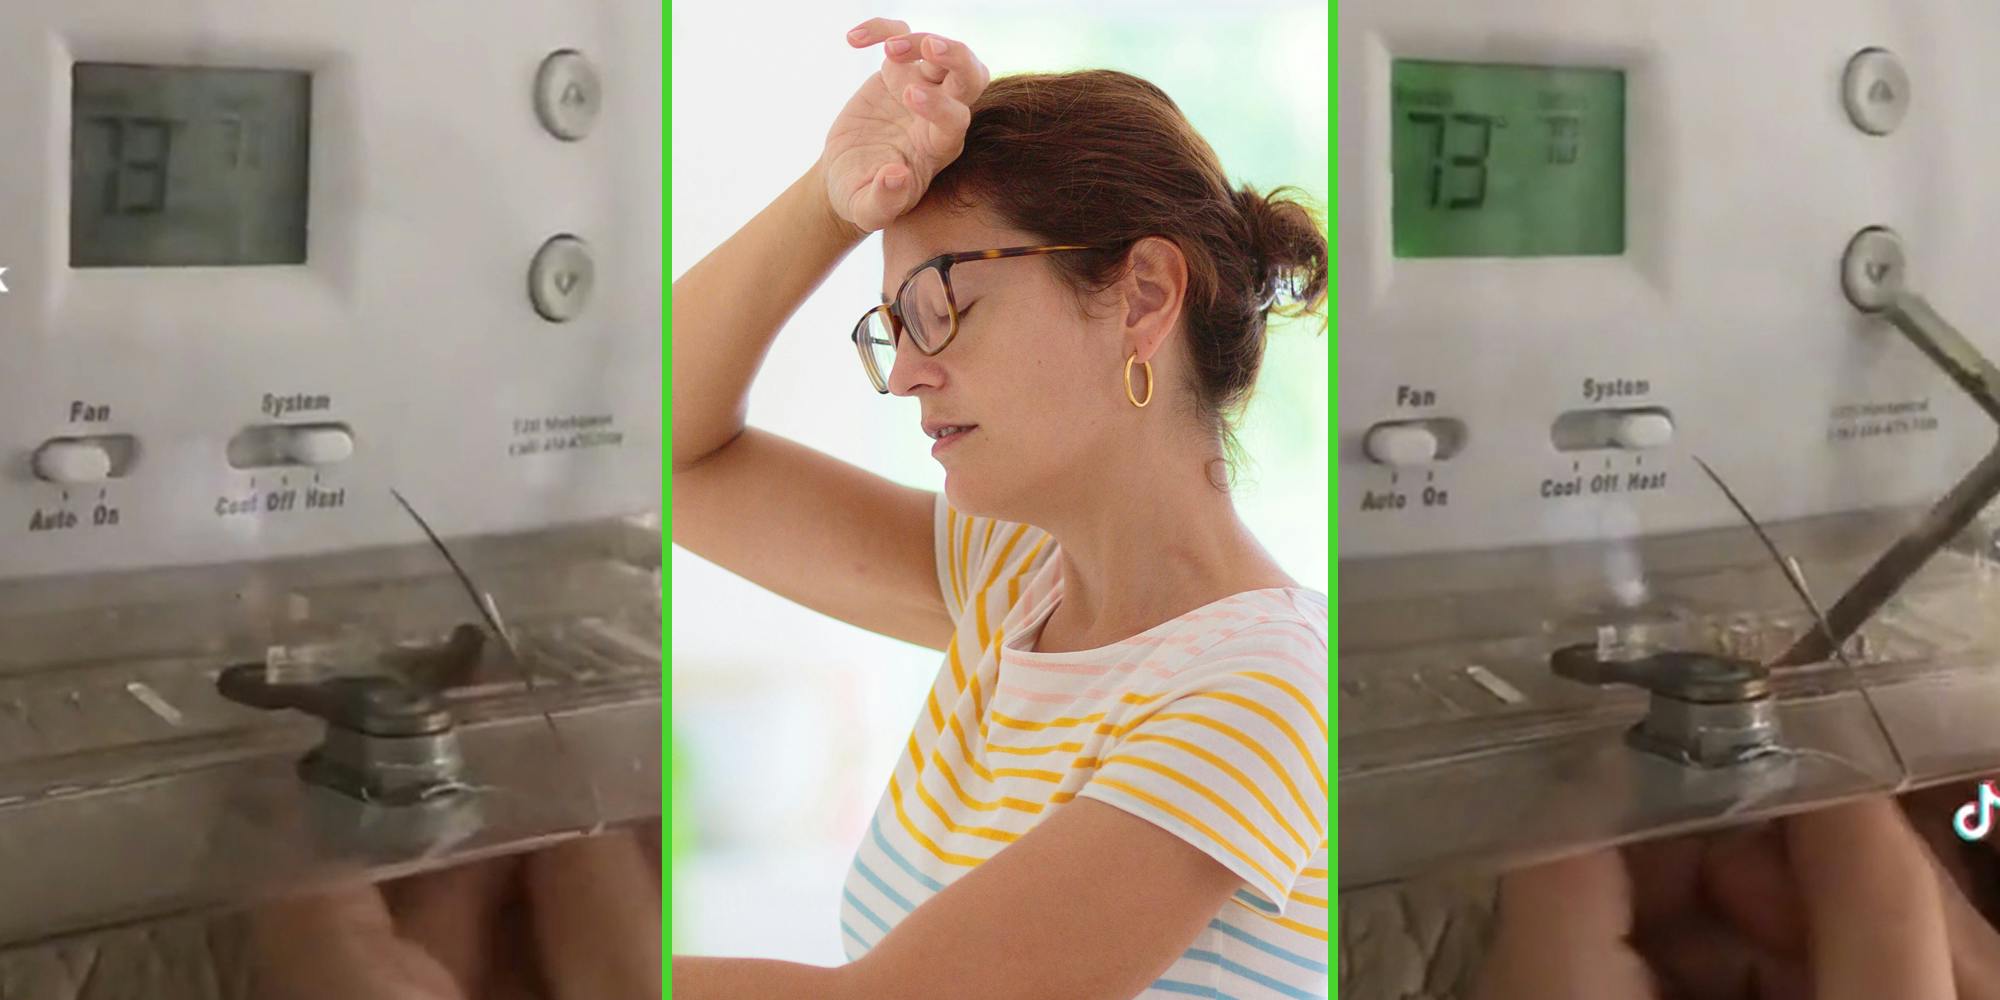 thermostat in lock box (l&r) woman sweating (c)